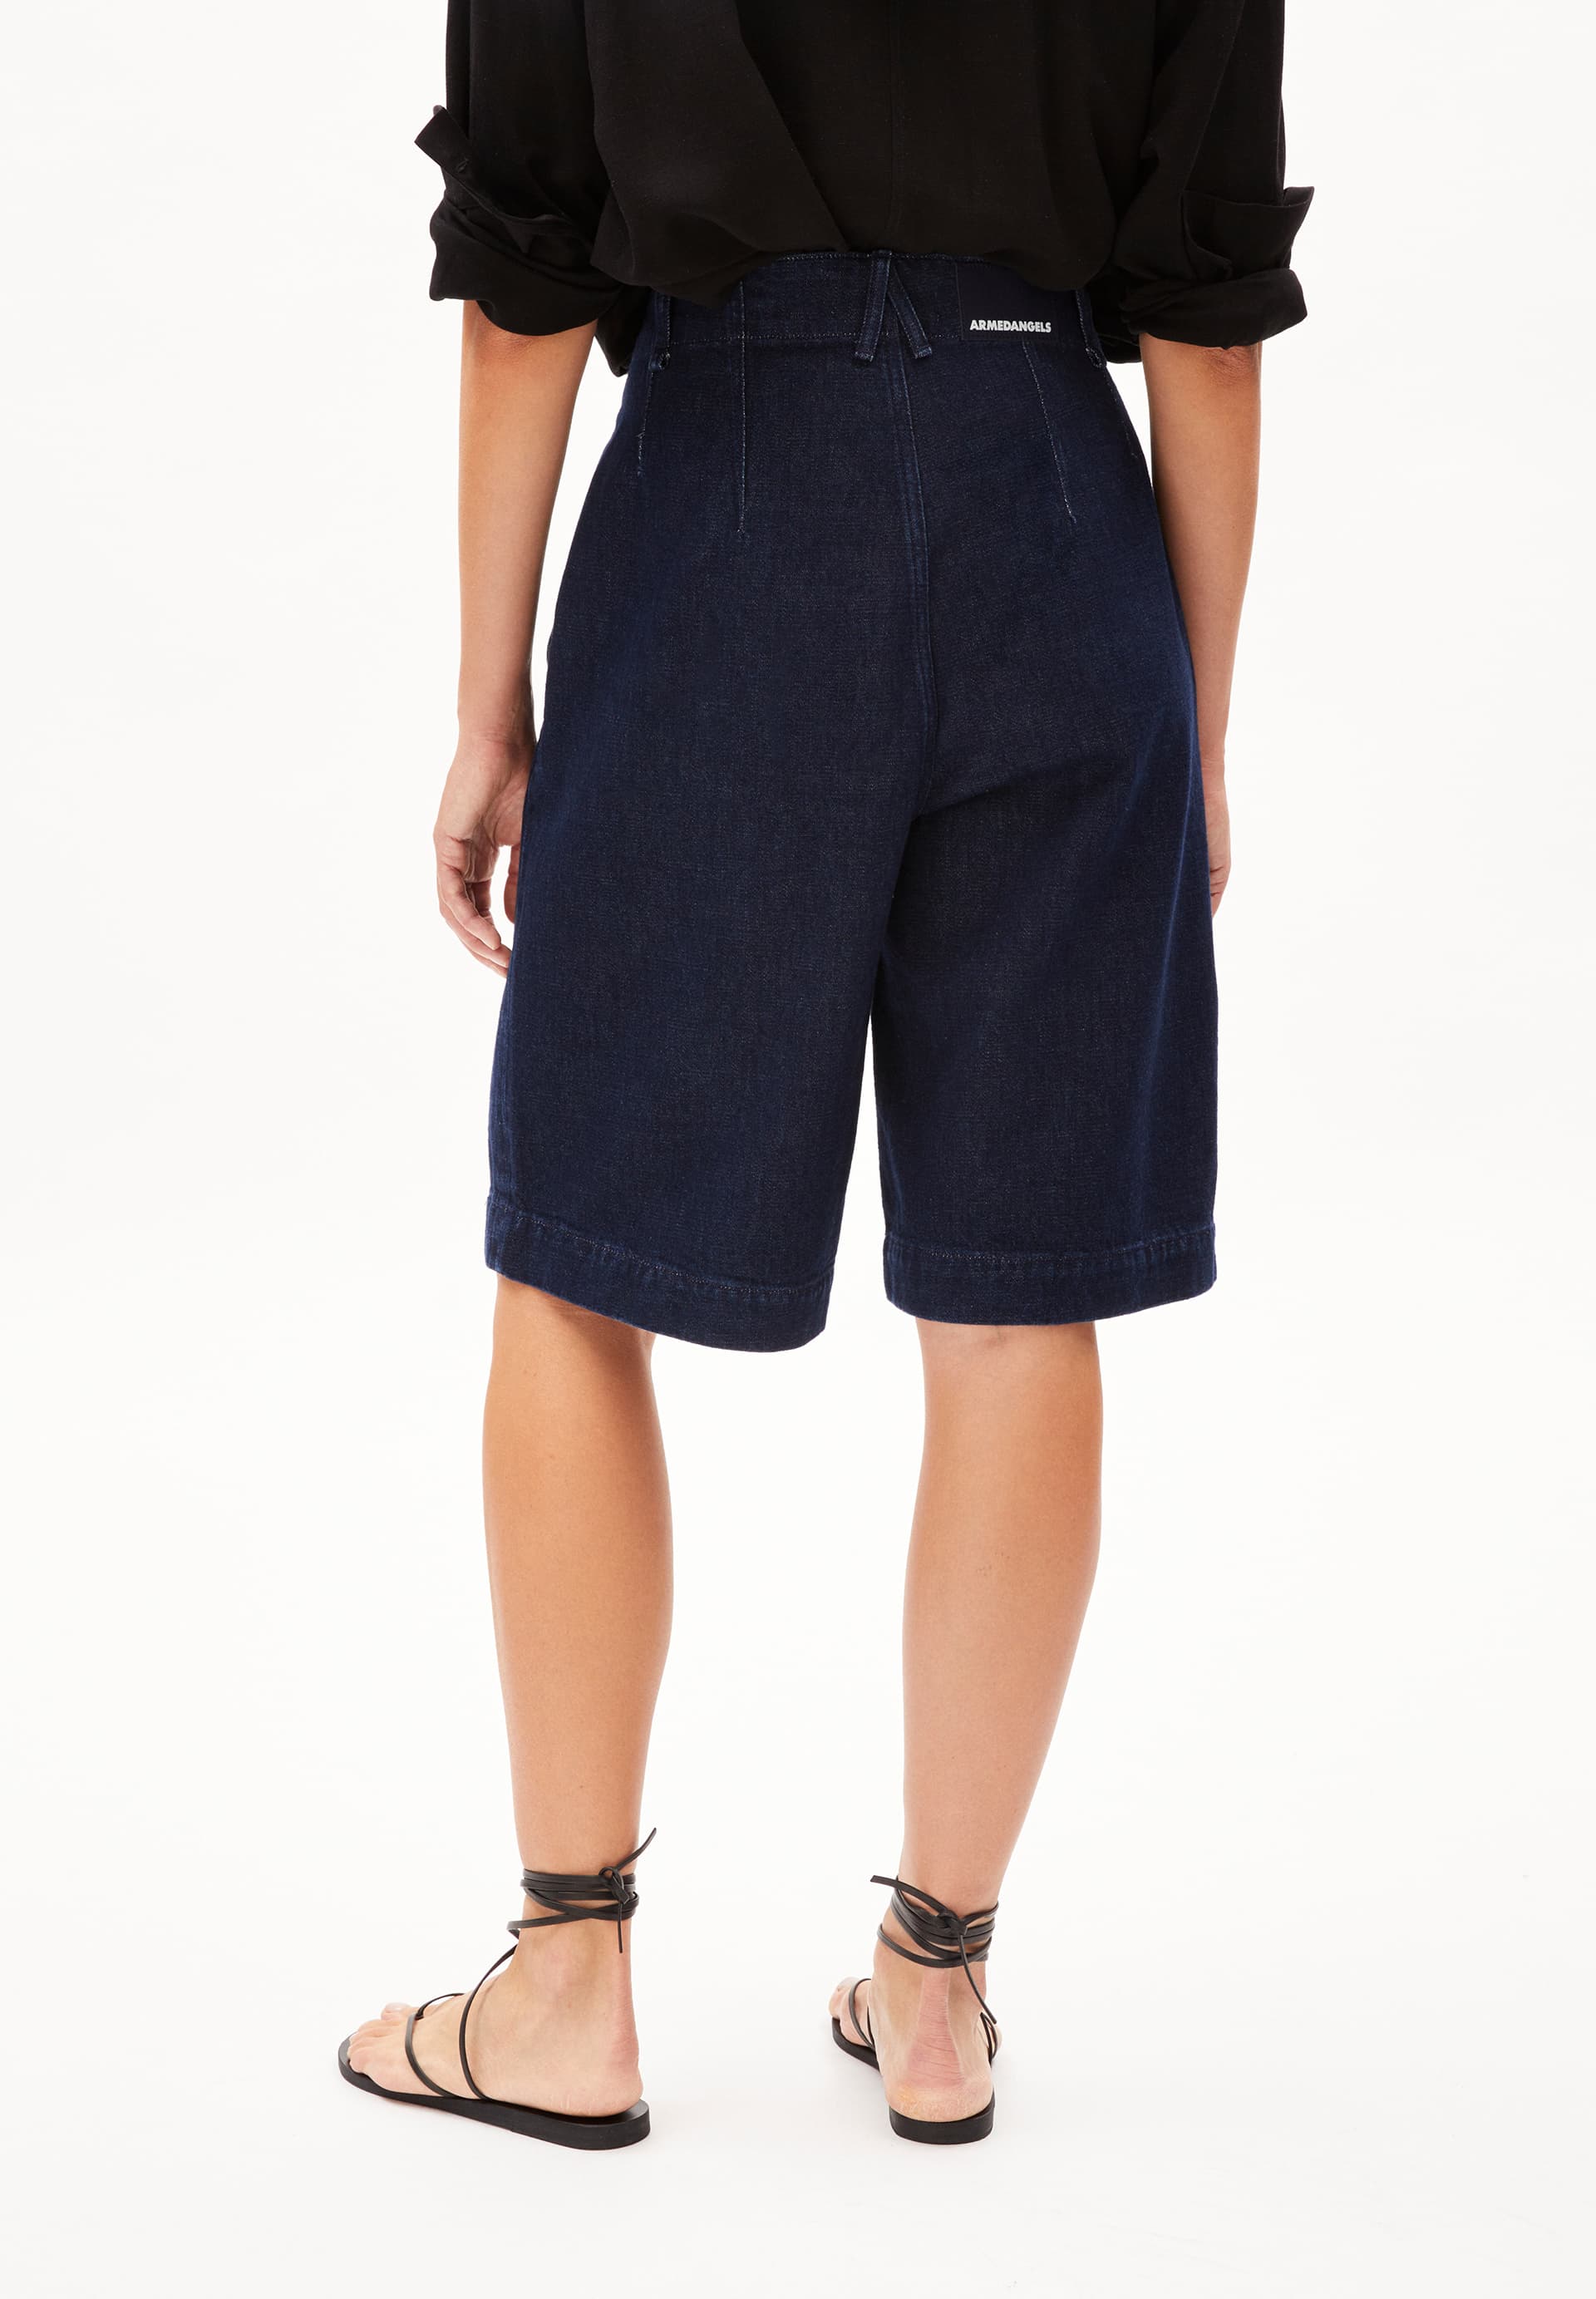 LUMIAAR Denim Shorts made of Organic Cotton Mix